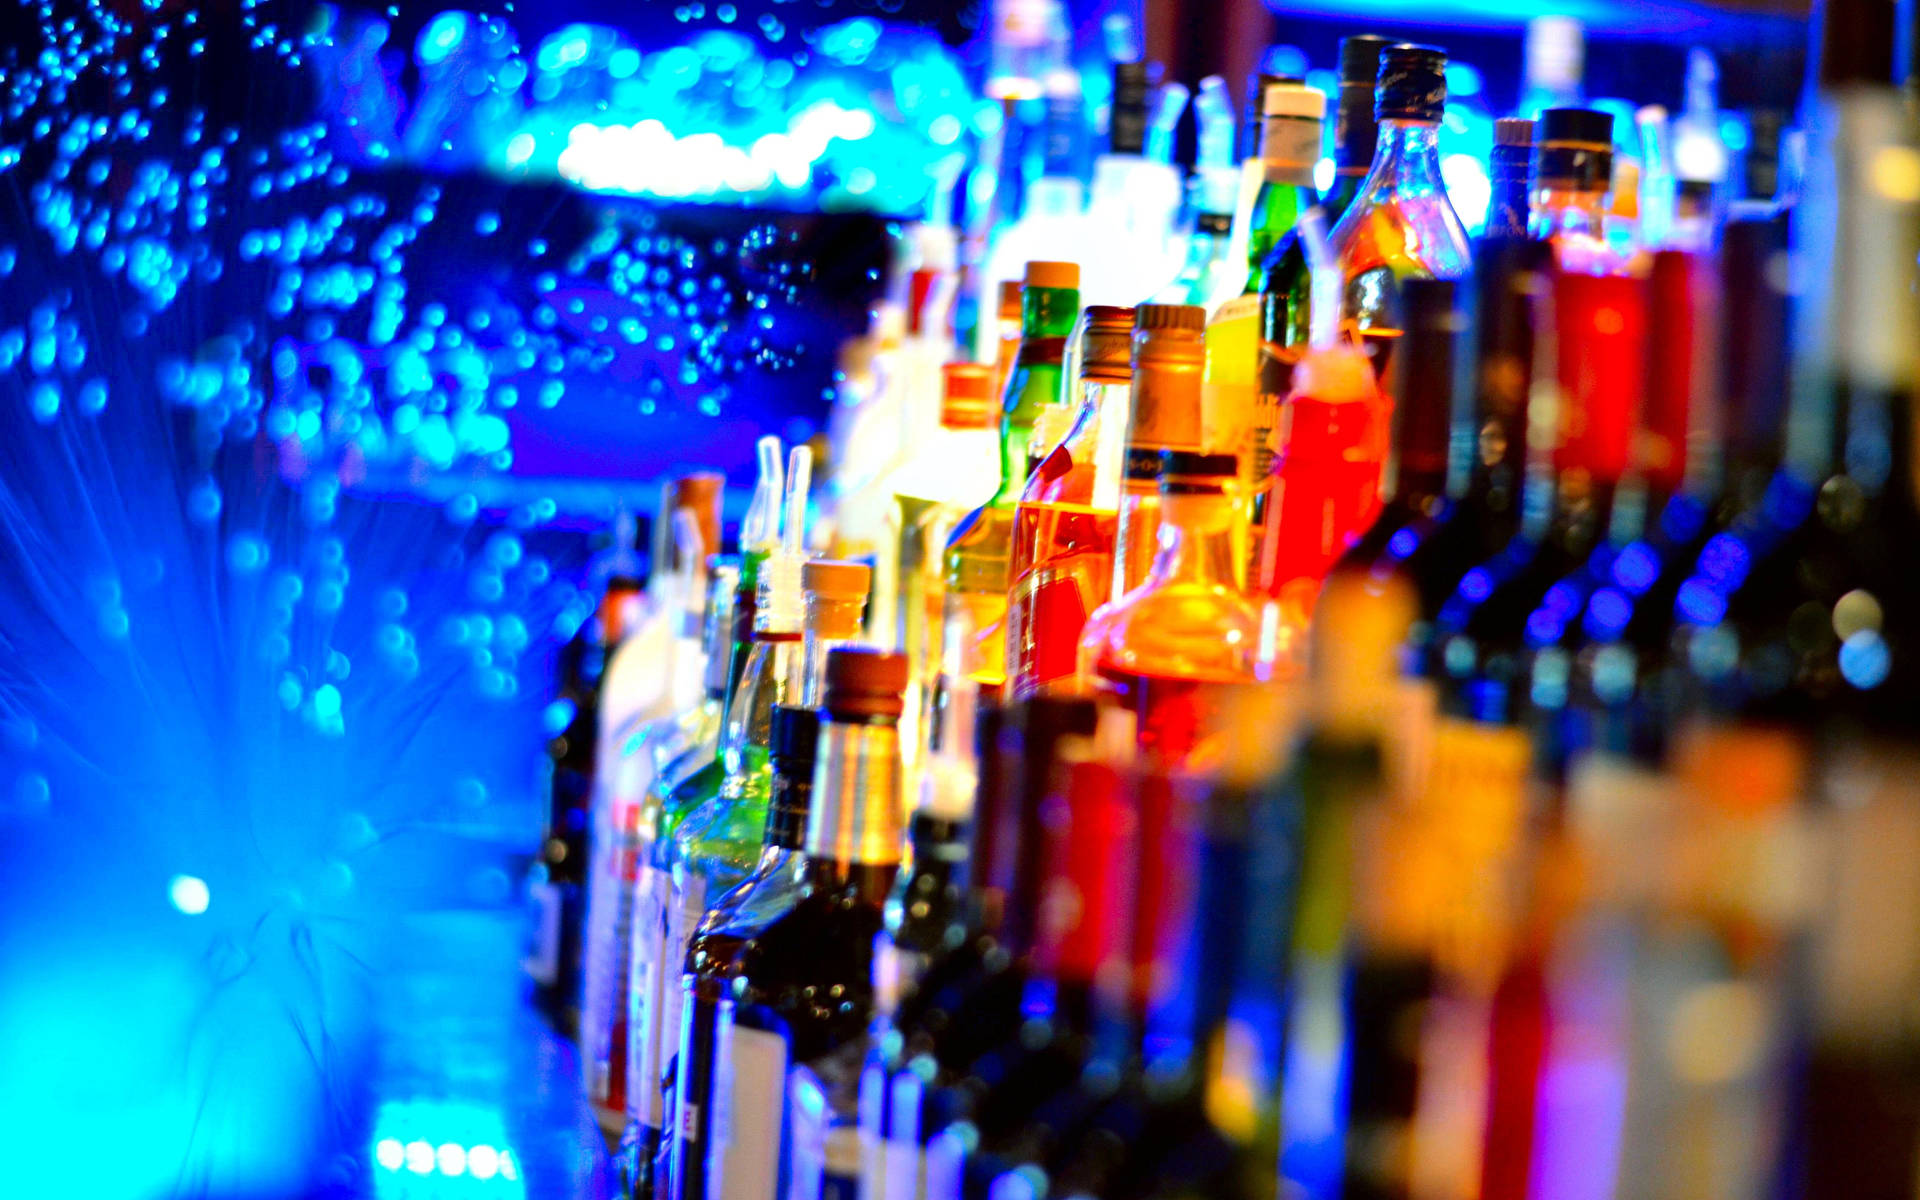 bar drinks background